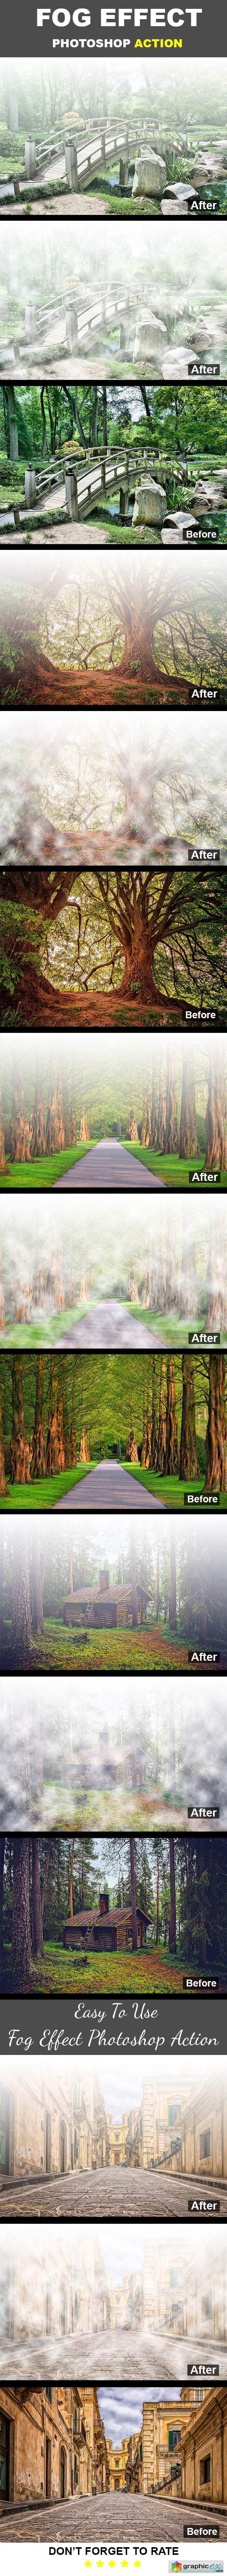 Fog Effect Photoshop Action 22753613